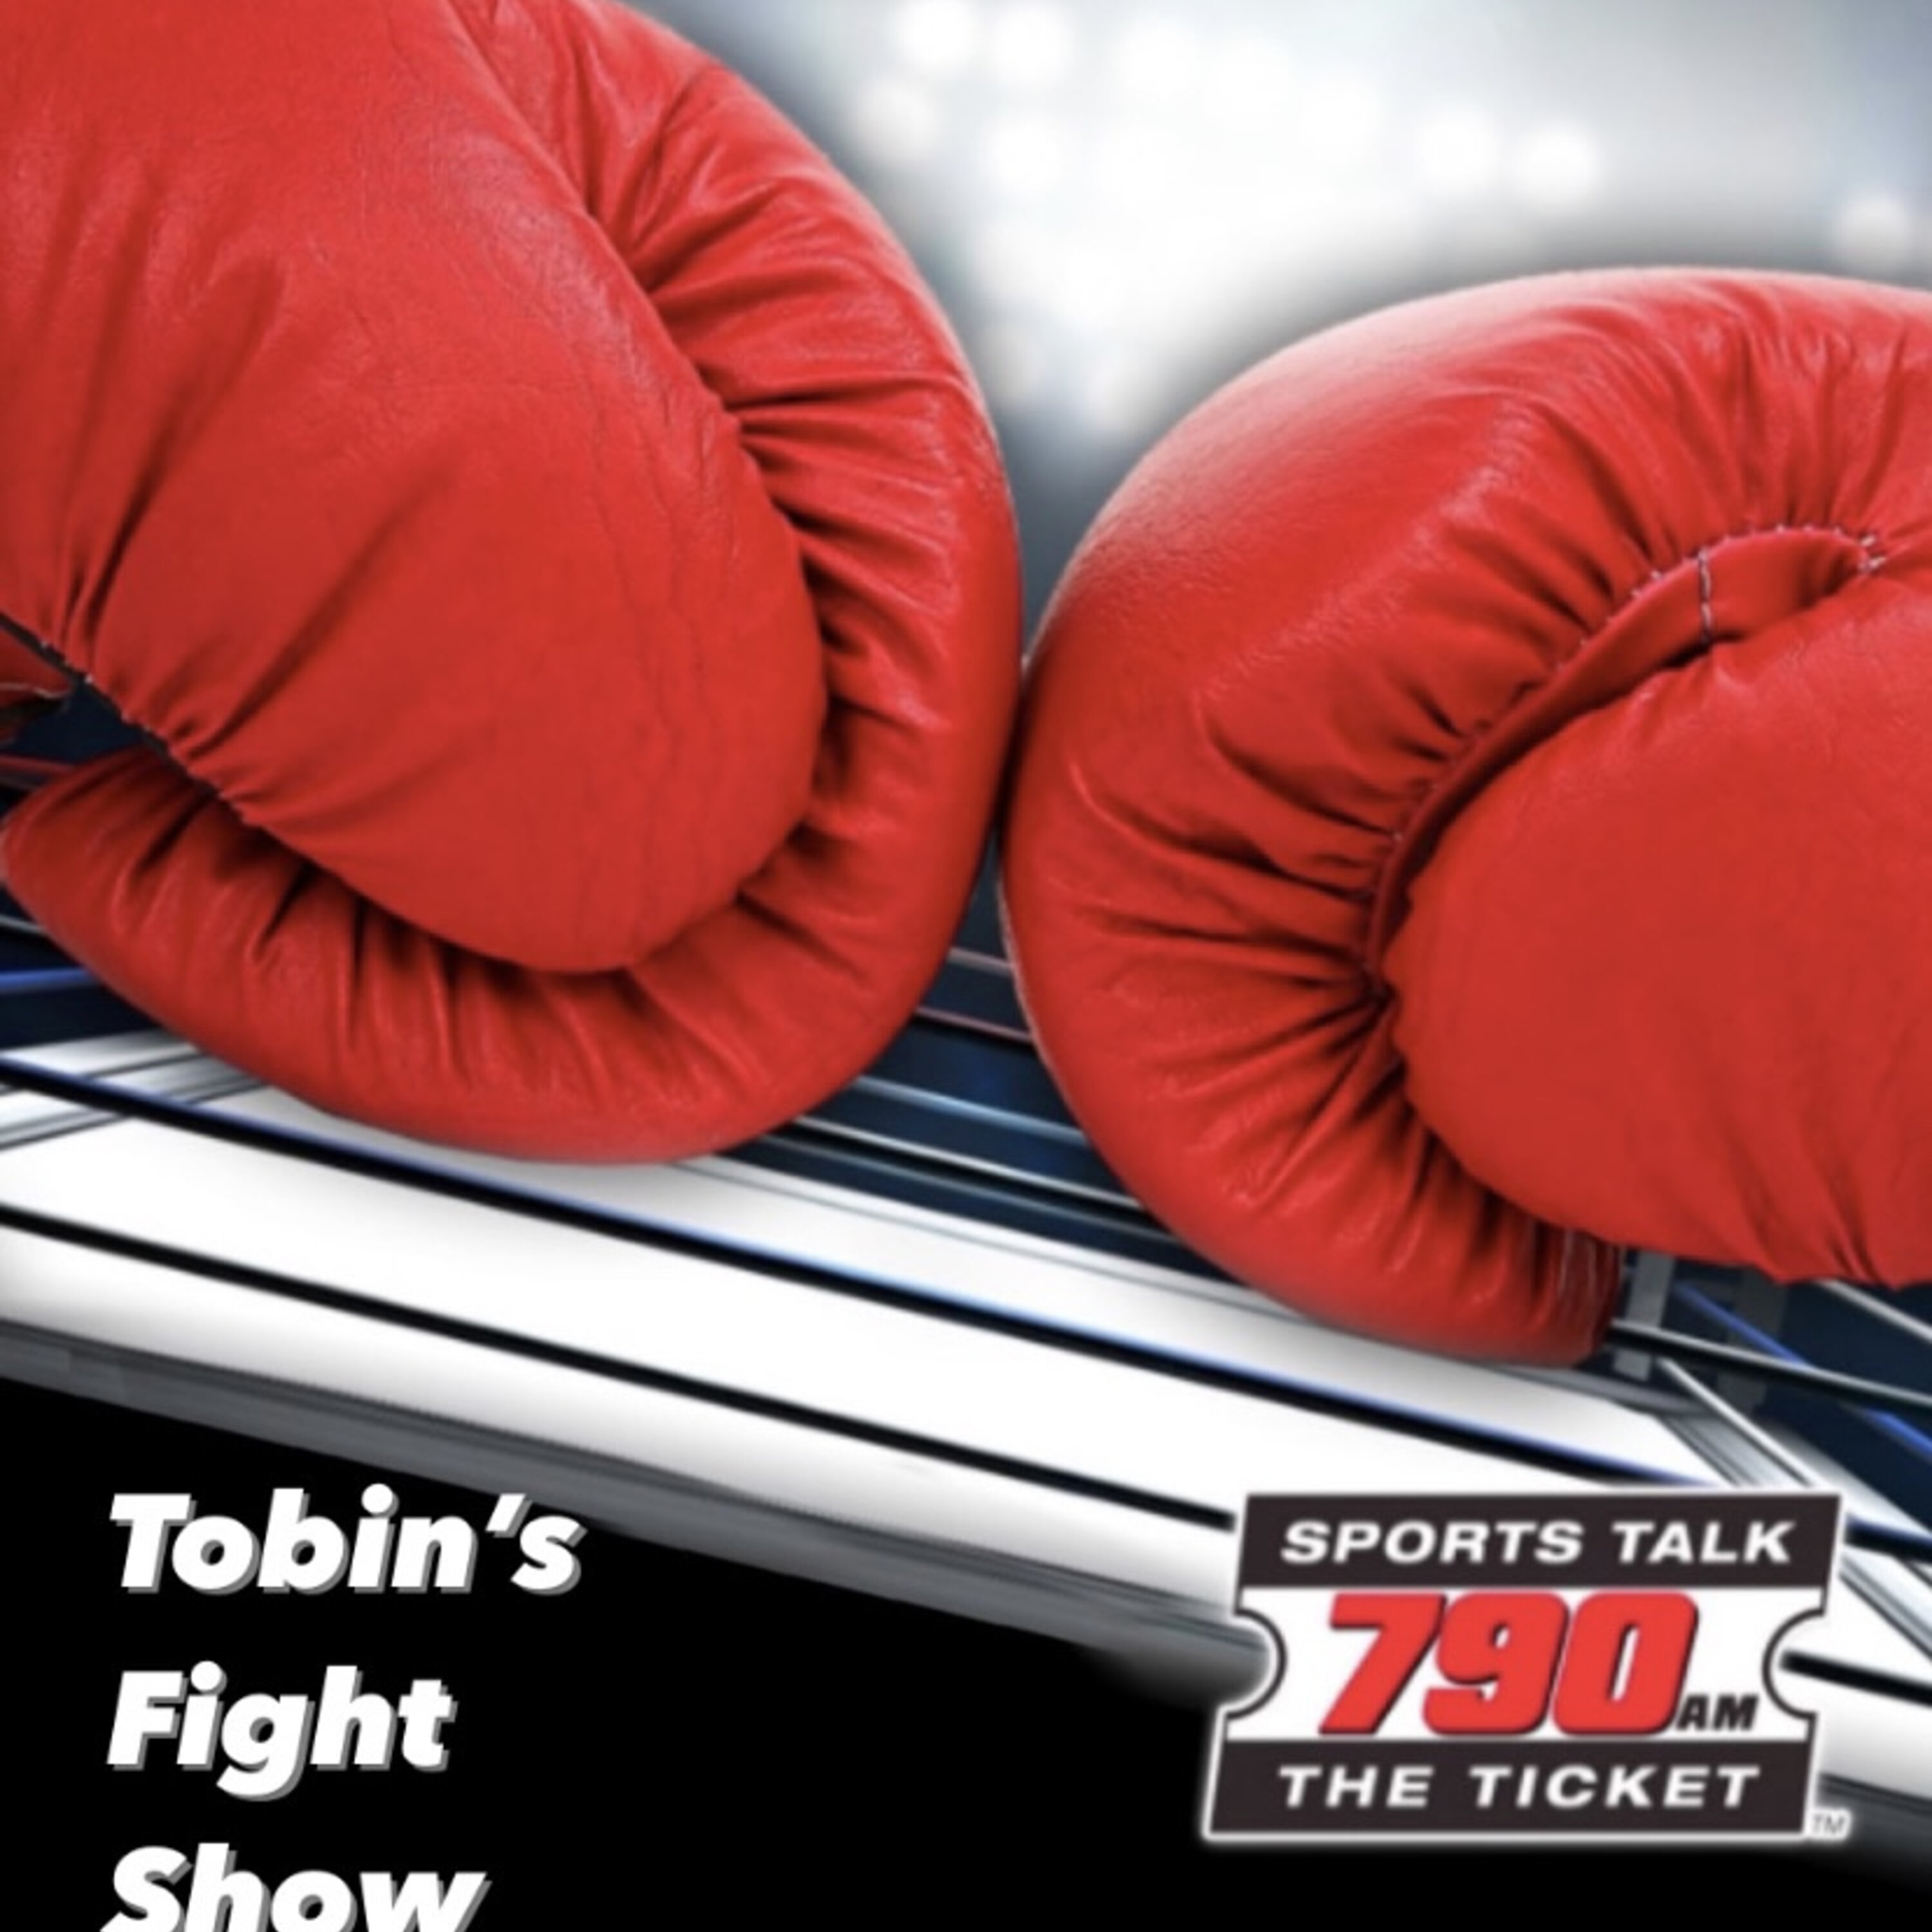 Tobin's Fight Show 12-5-2021 (Haney beats Diaz, UFC 269 Preview, Aldo back)